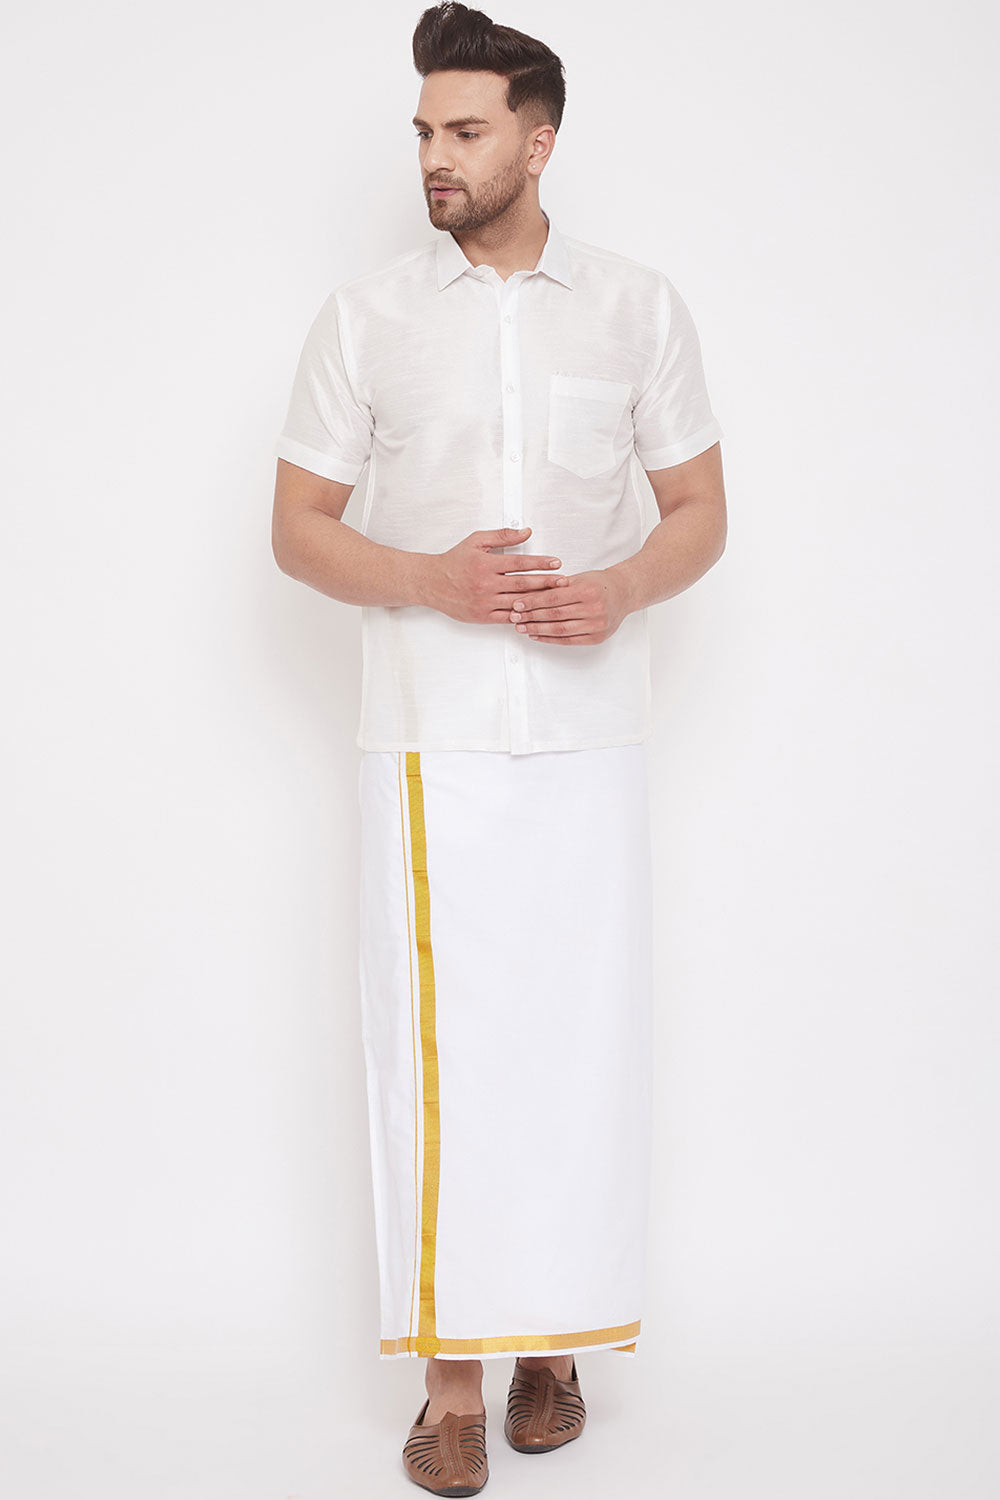 White Art Silk Shirt and Mundu for Men's